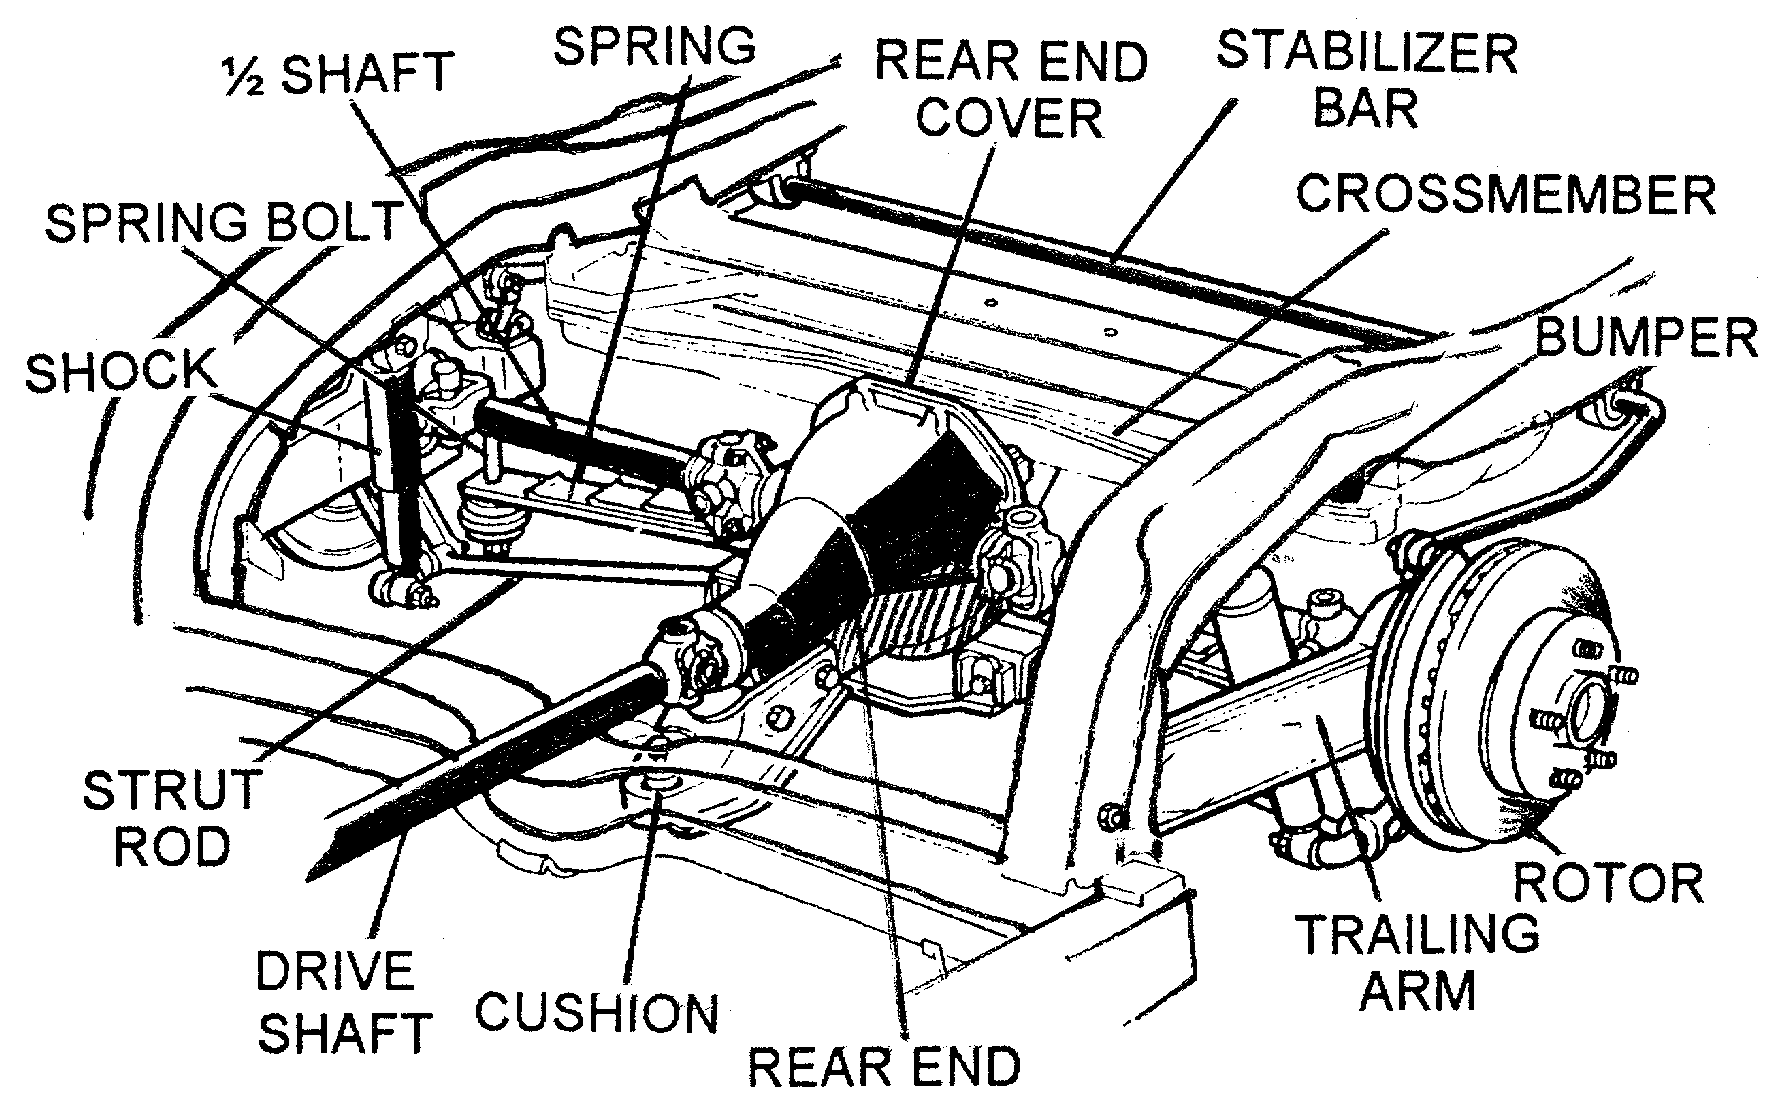 Rear Suspension Detail - Diagram View - Chicago Corvette Supply.